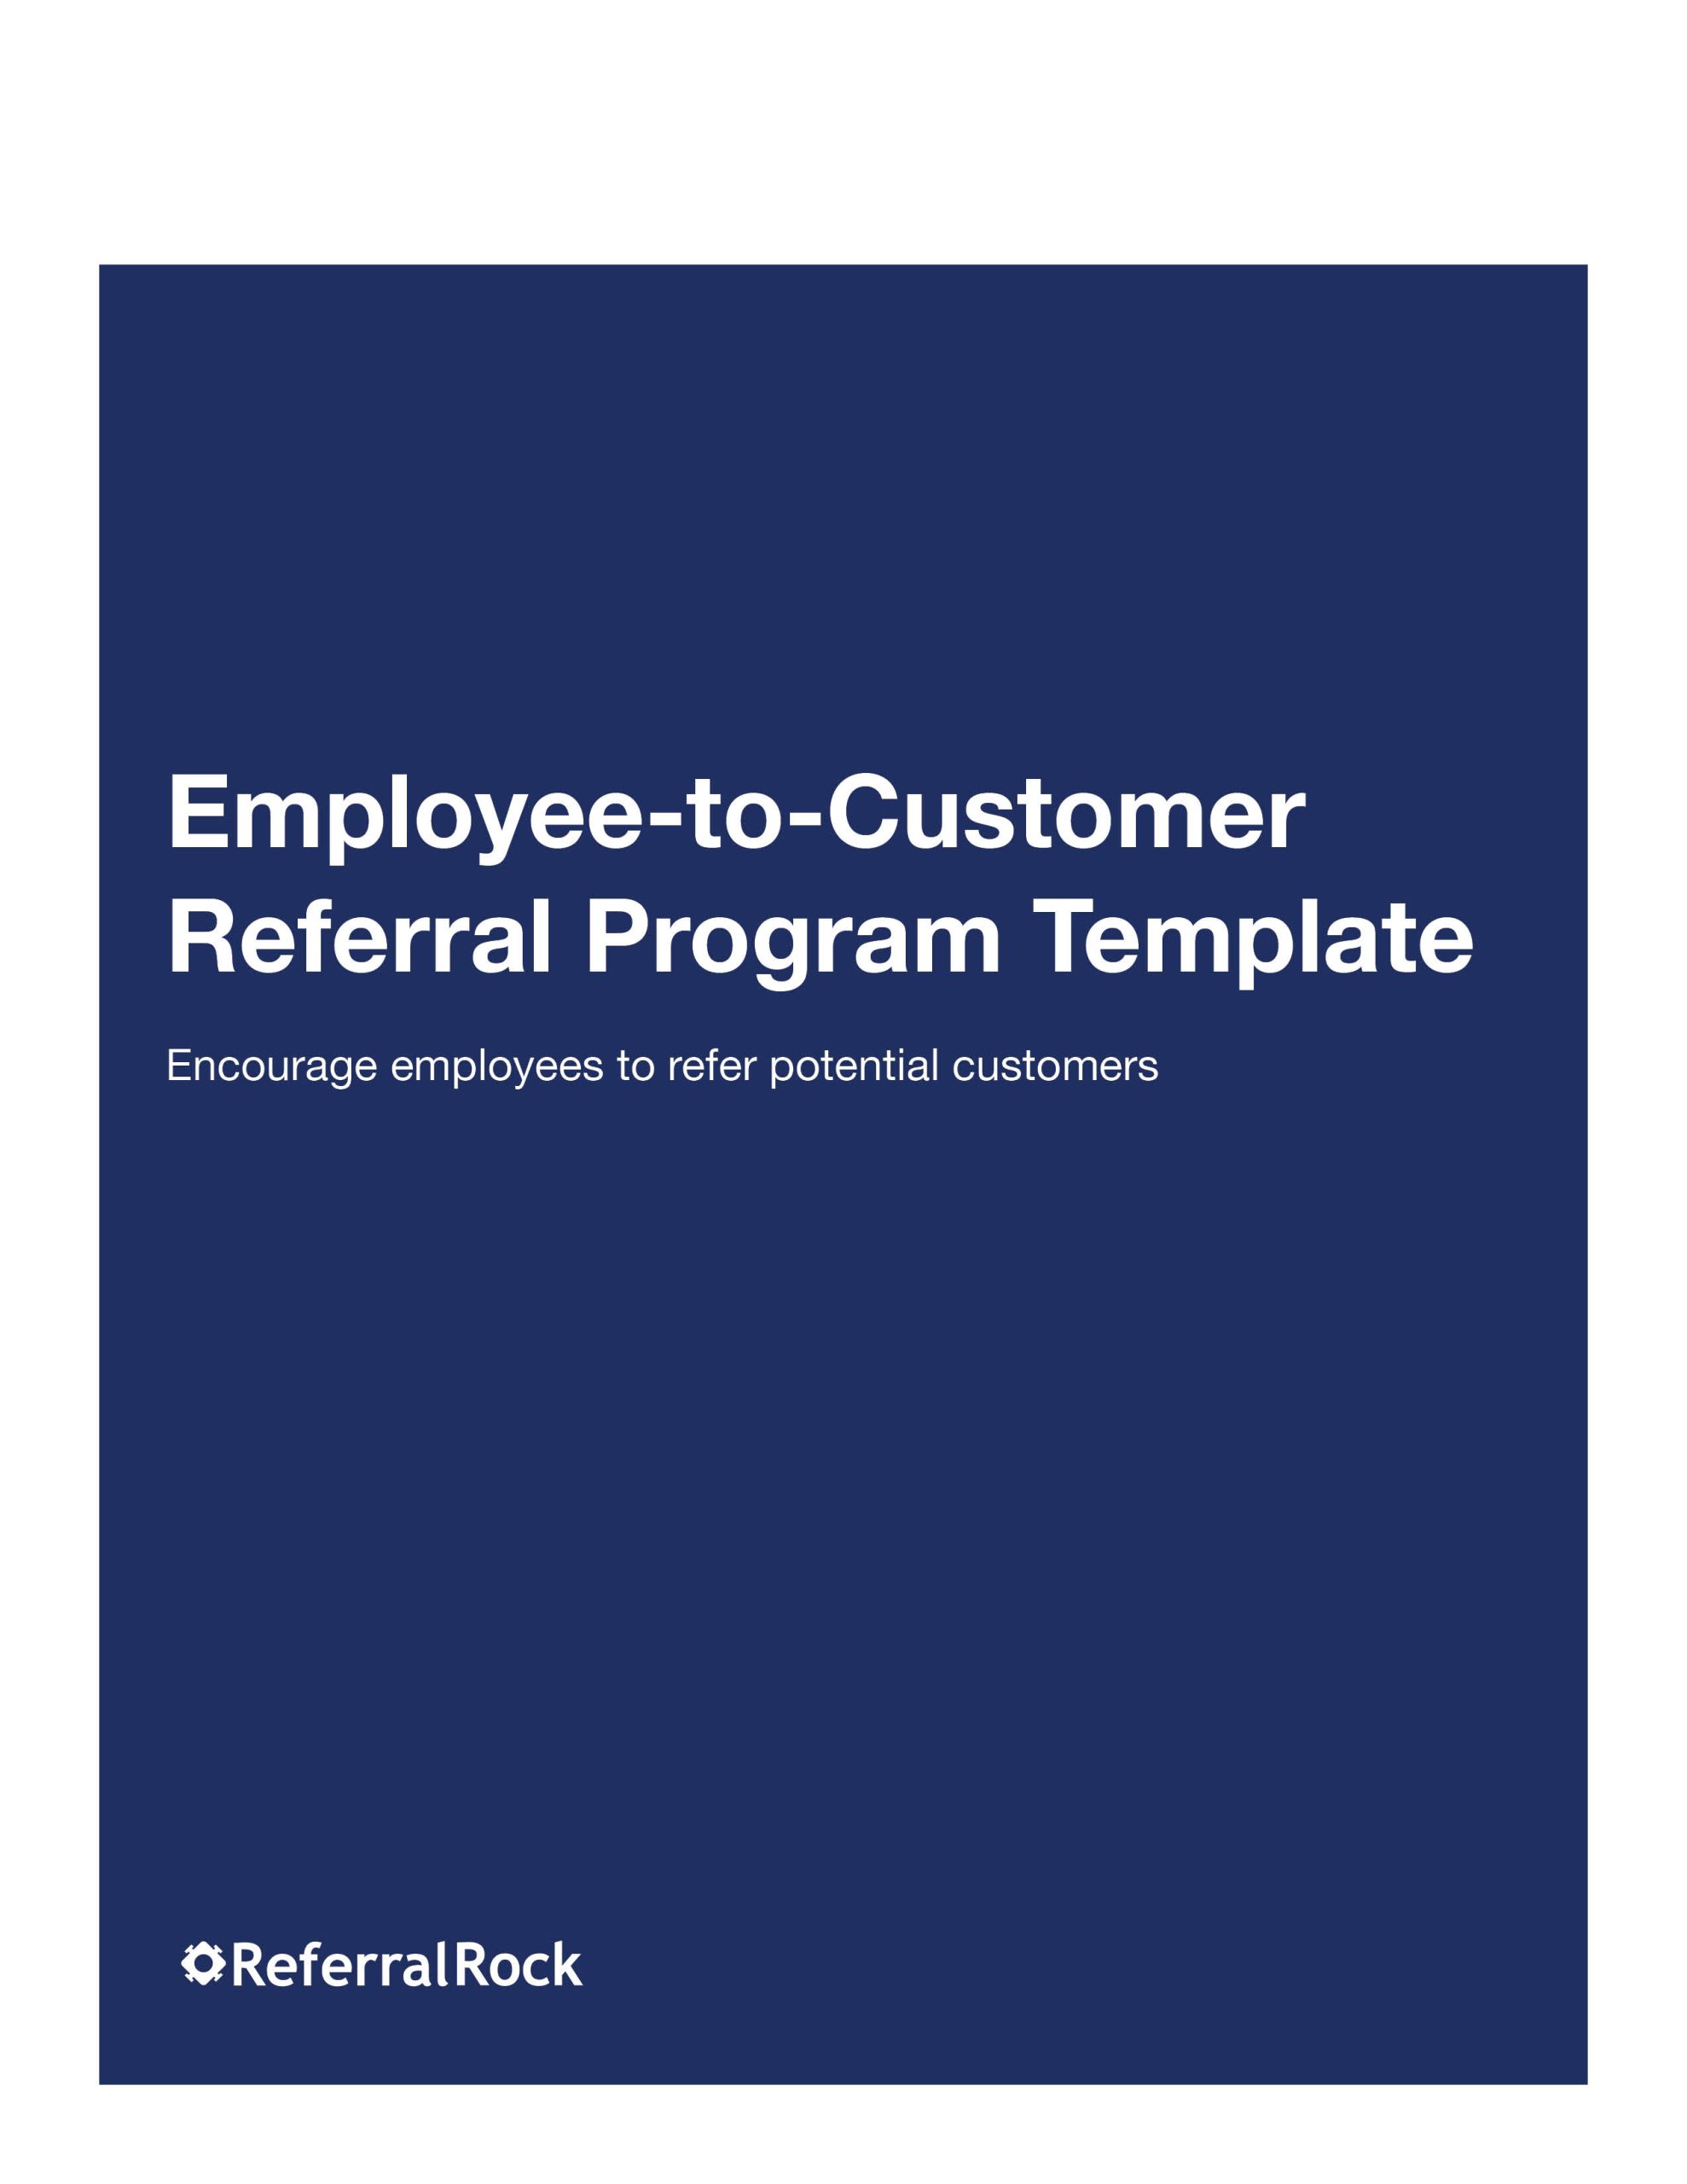 employee referral program template (employee to customer)